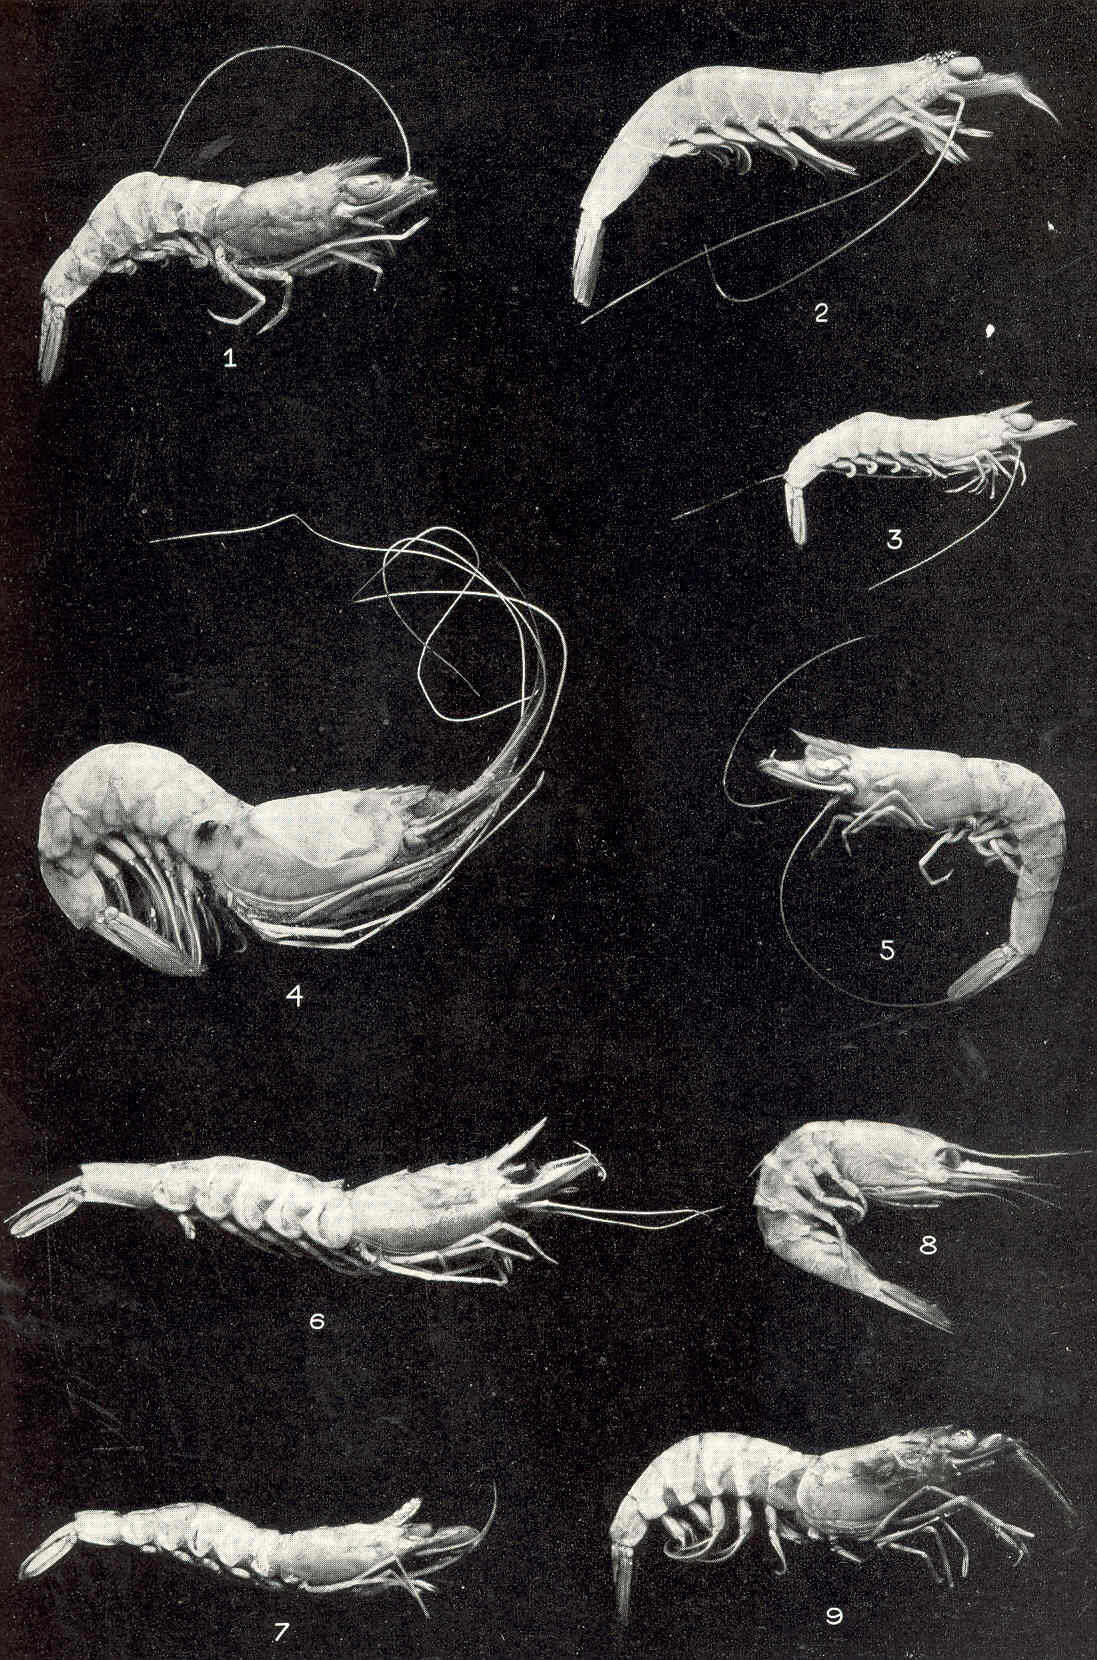 Image of shrimp